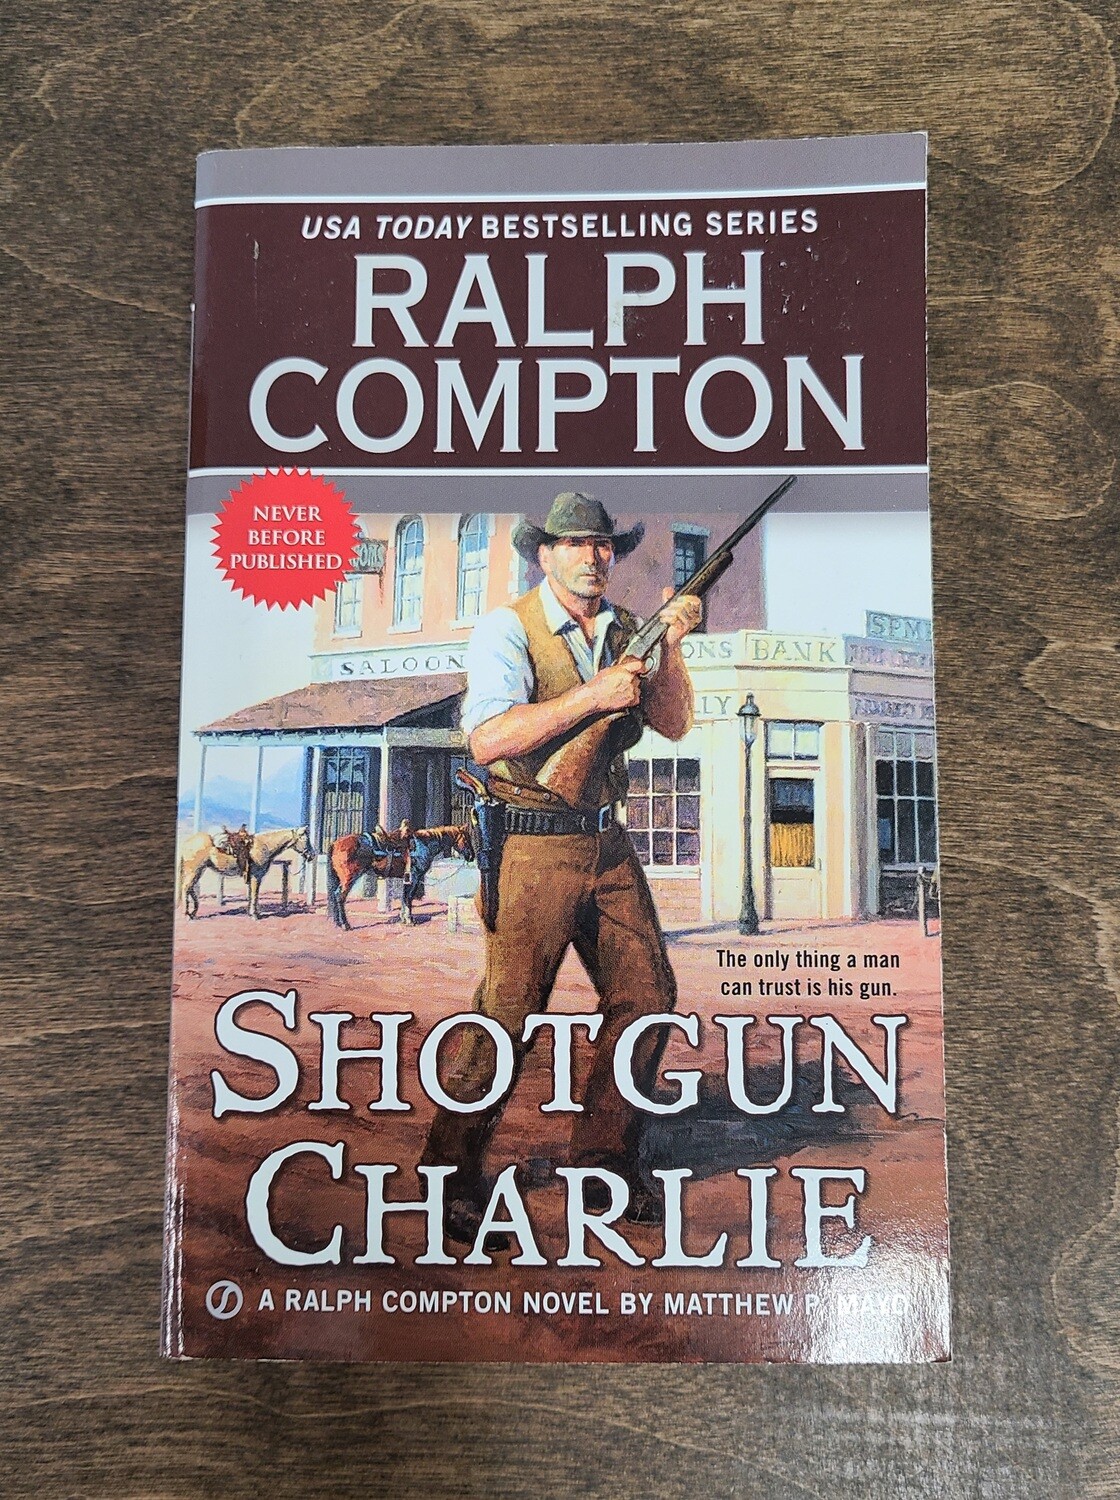 Shotgun Charlie by Ralph Compton